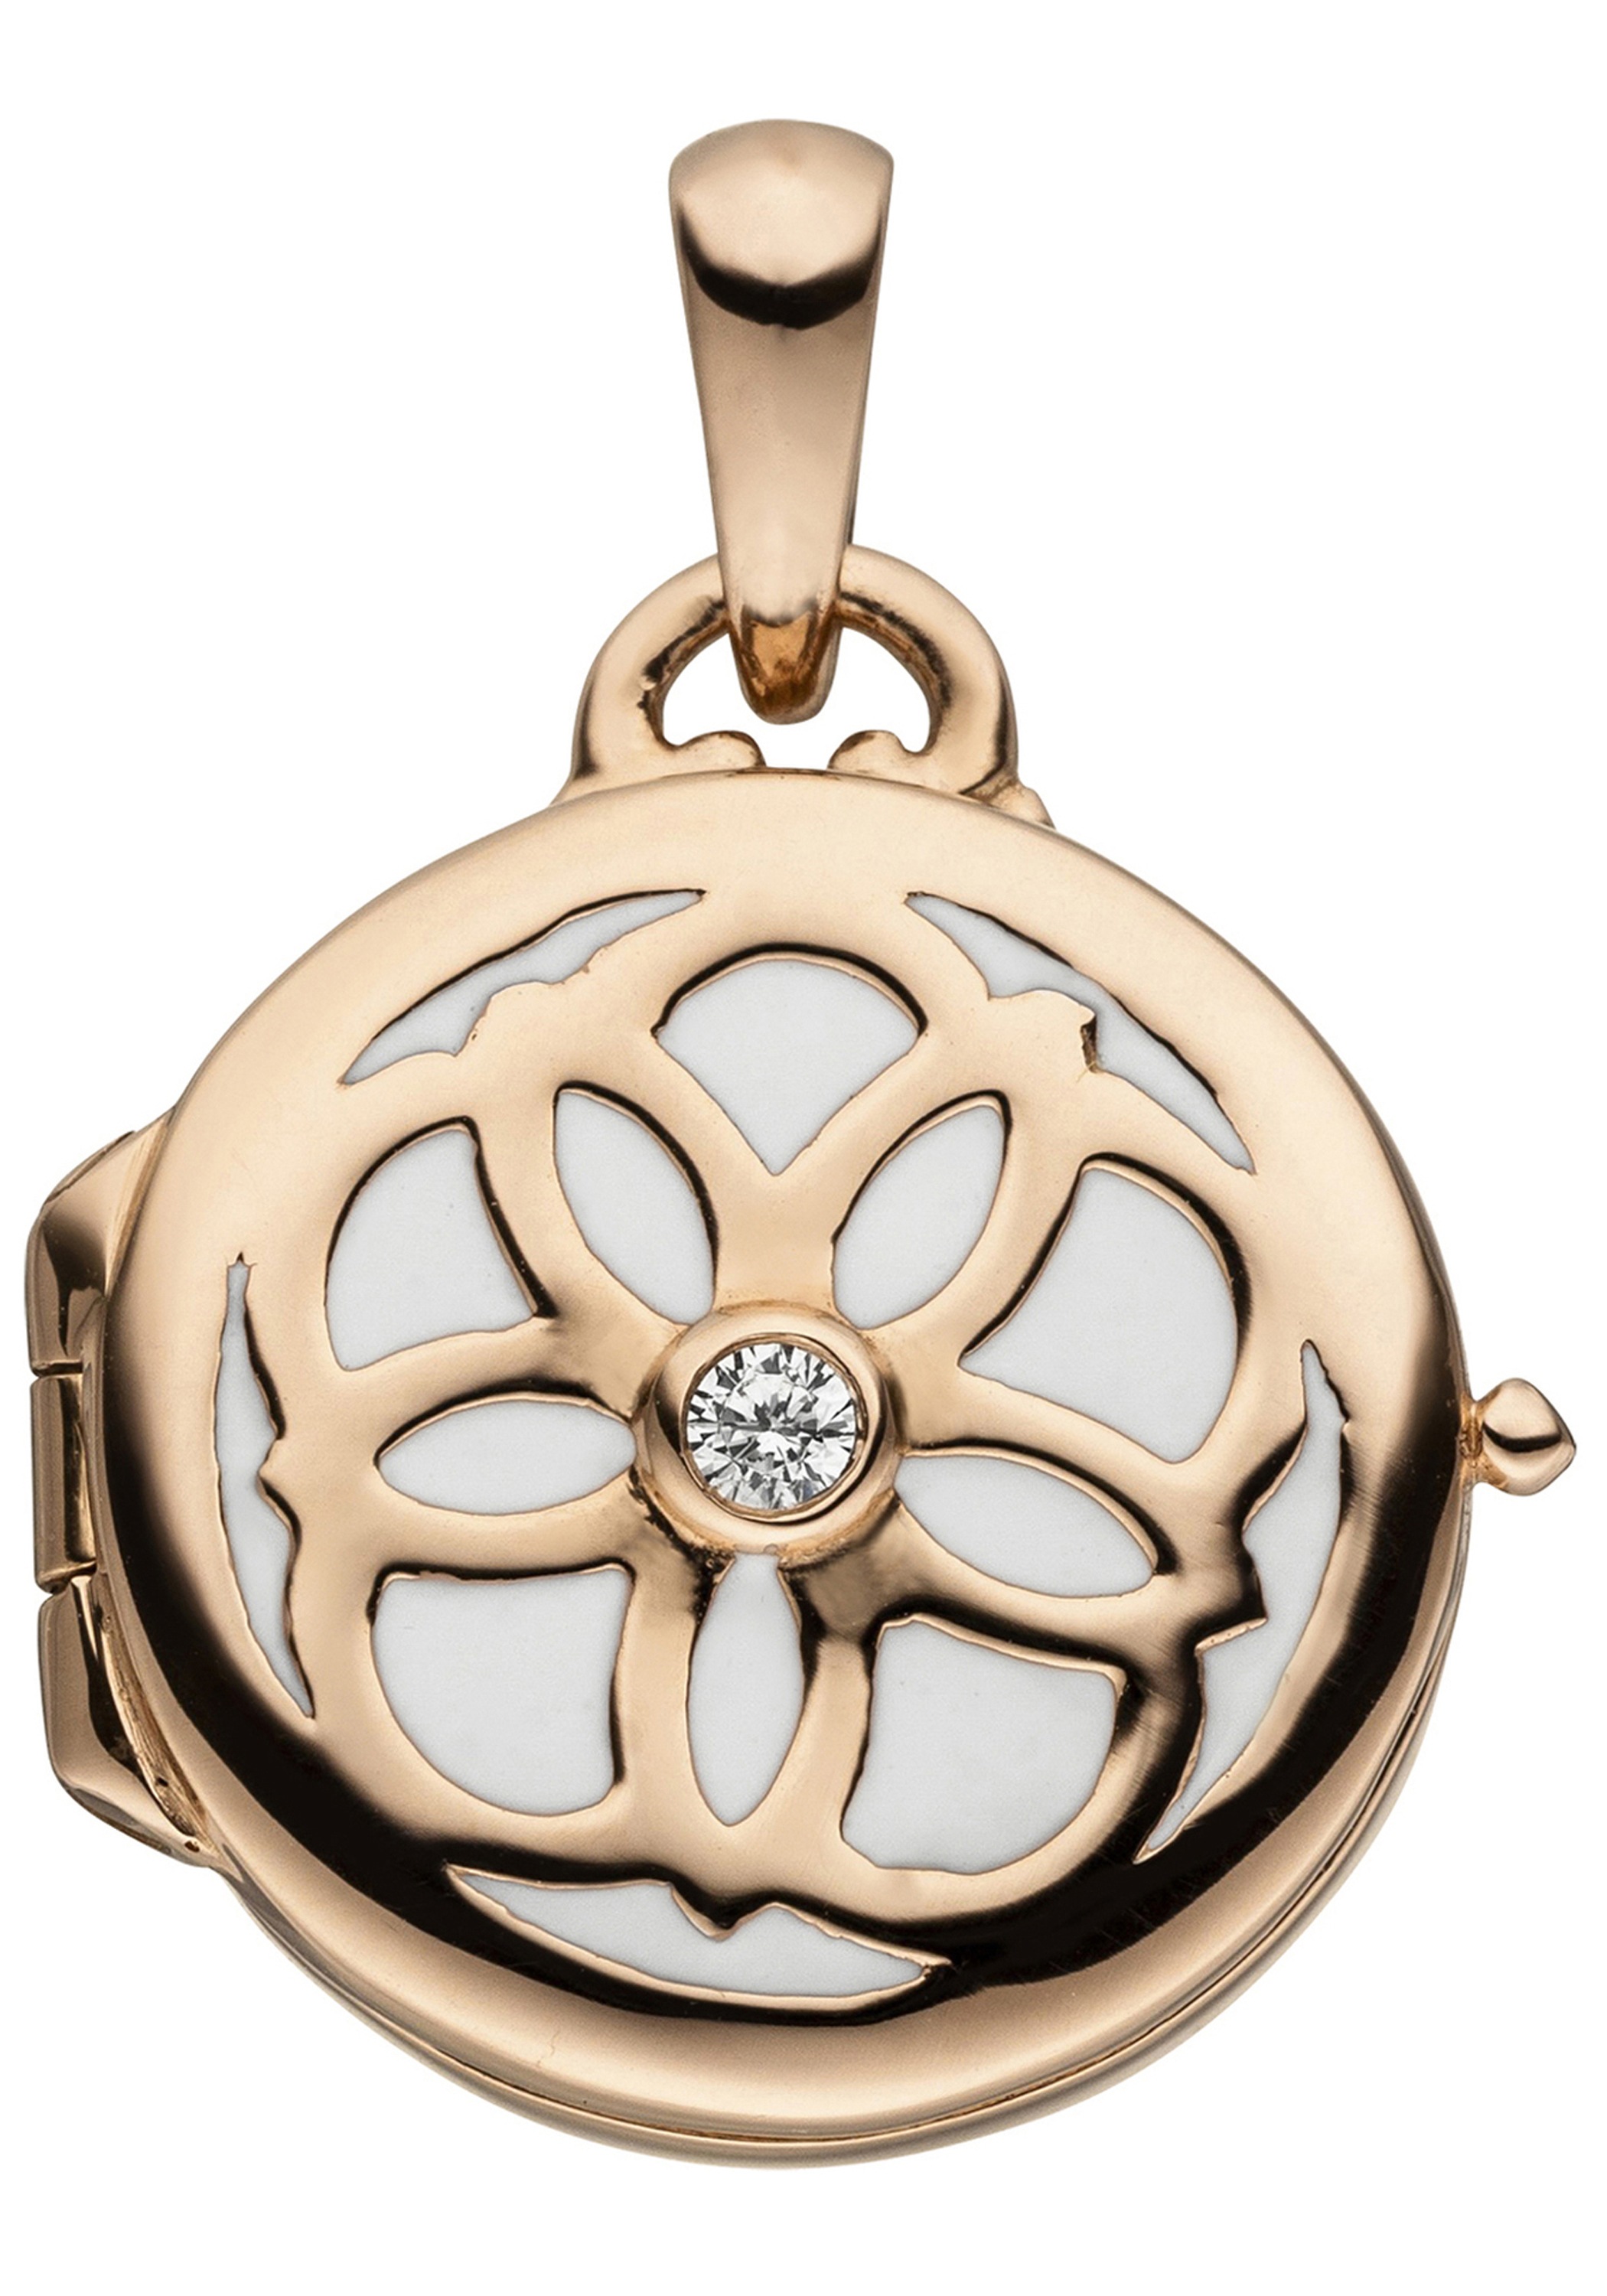 JOBO Medallionanhänger »Kleines Medaillon«, 925 Silber roségold vergoldet  mit Zirkonia online kaufen | BAUR